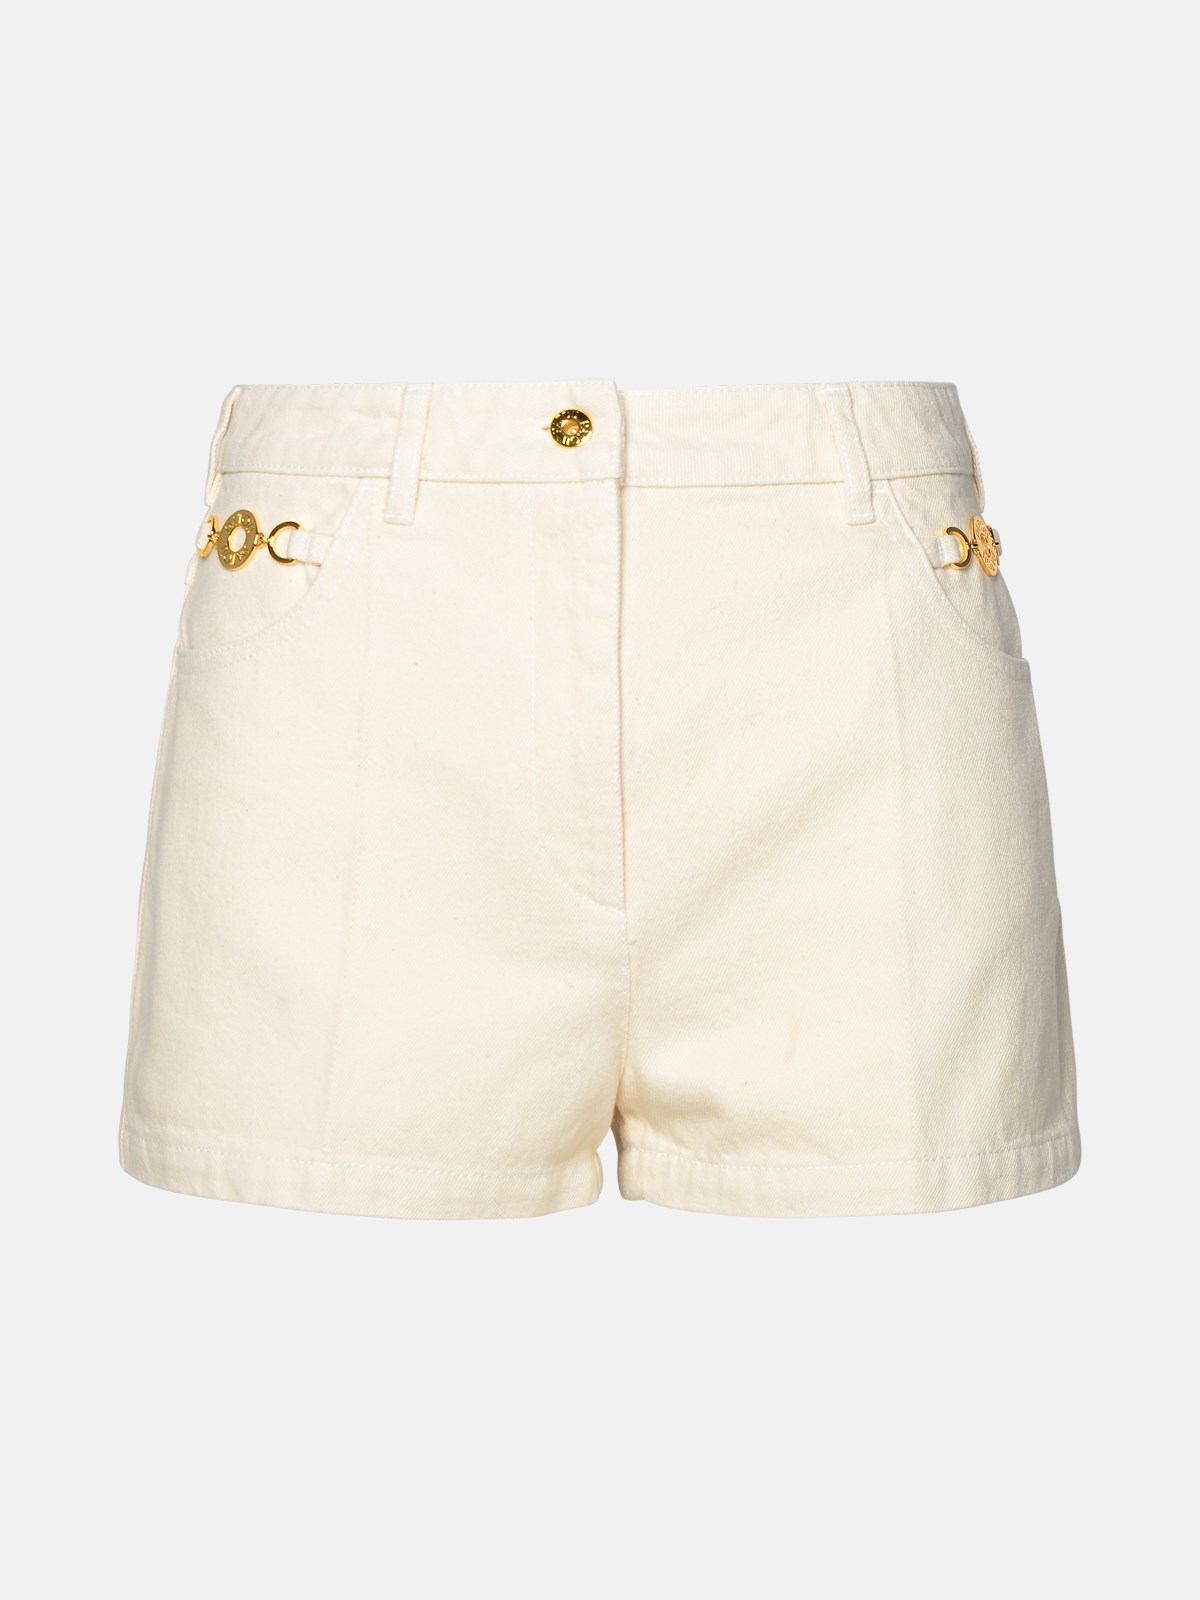 Patou Ivory Cotton Mini Shorts